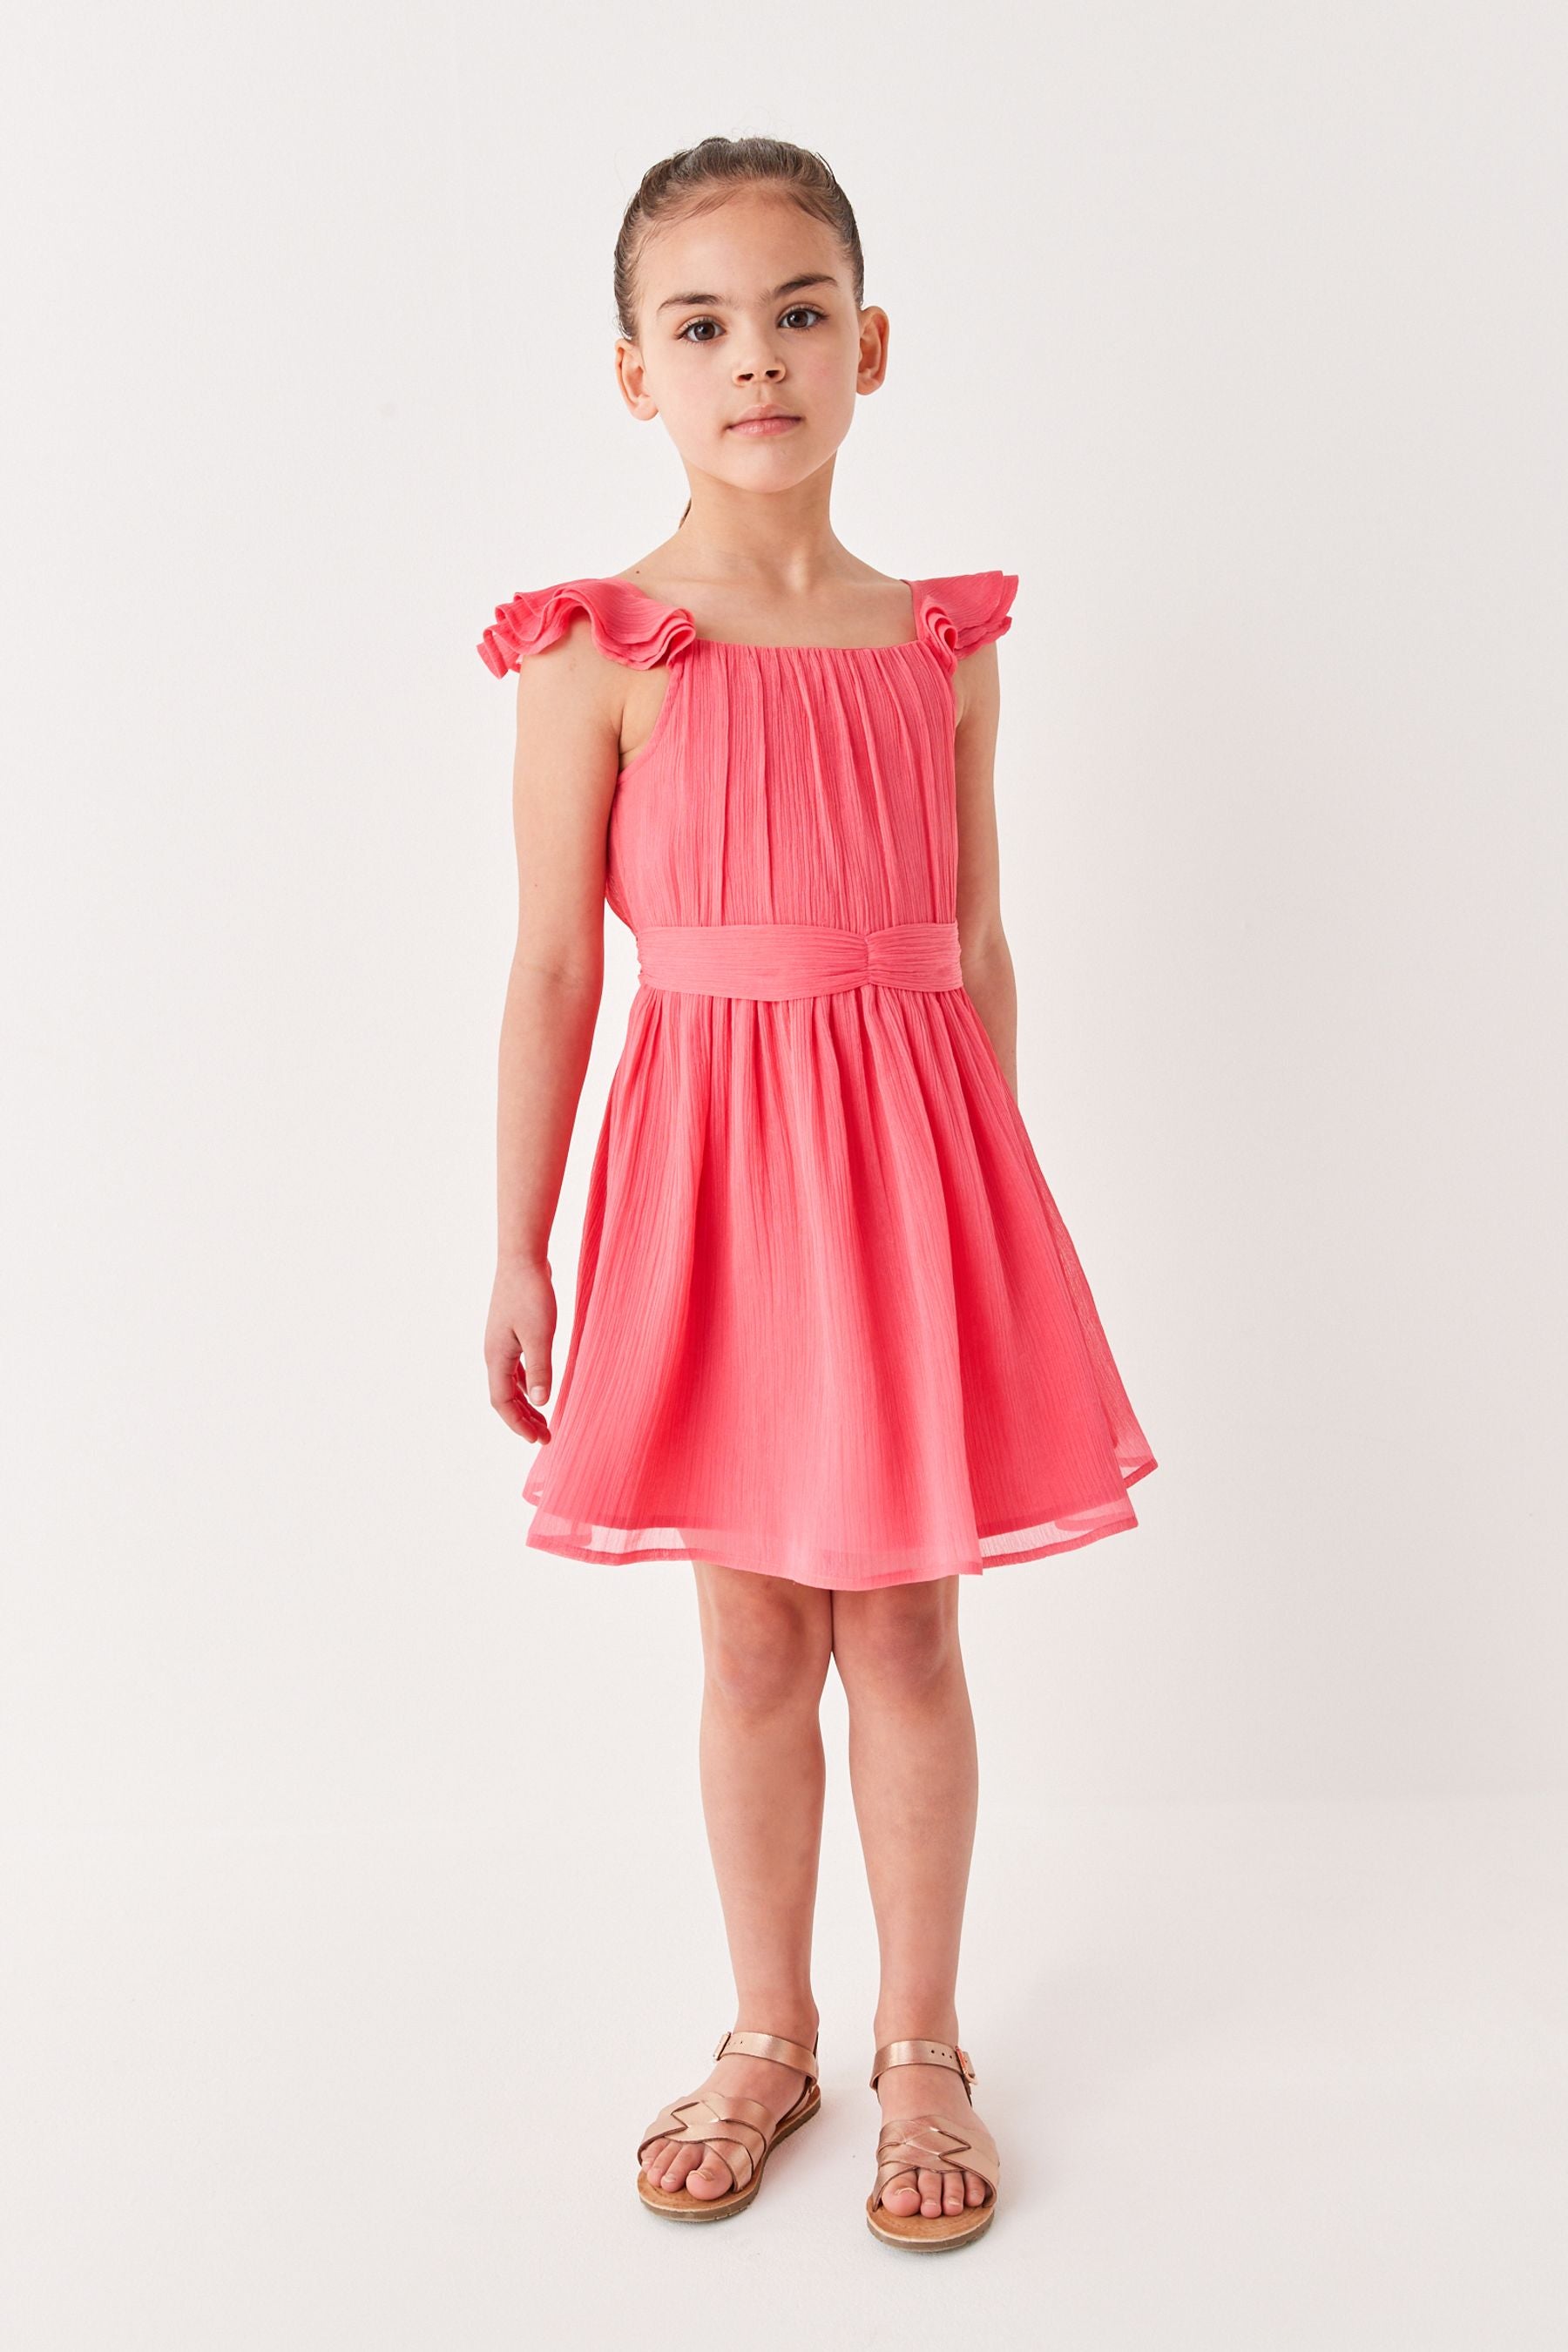 Coral Pink Chiffon Party Dress (3-16yrs)